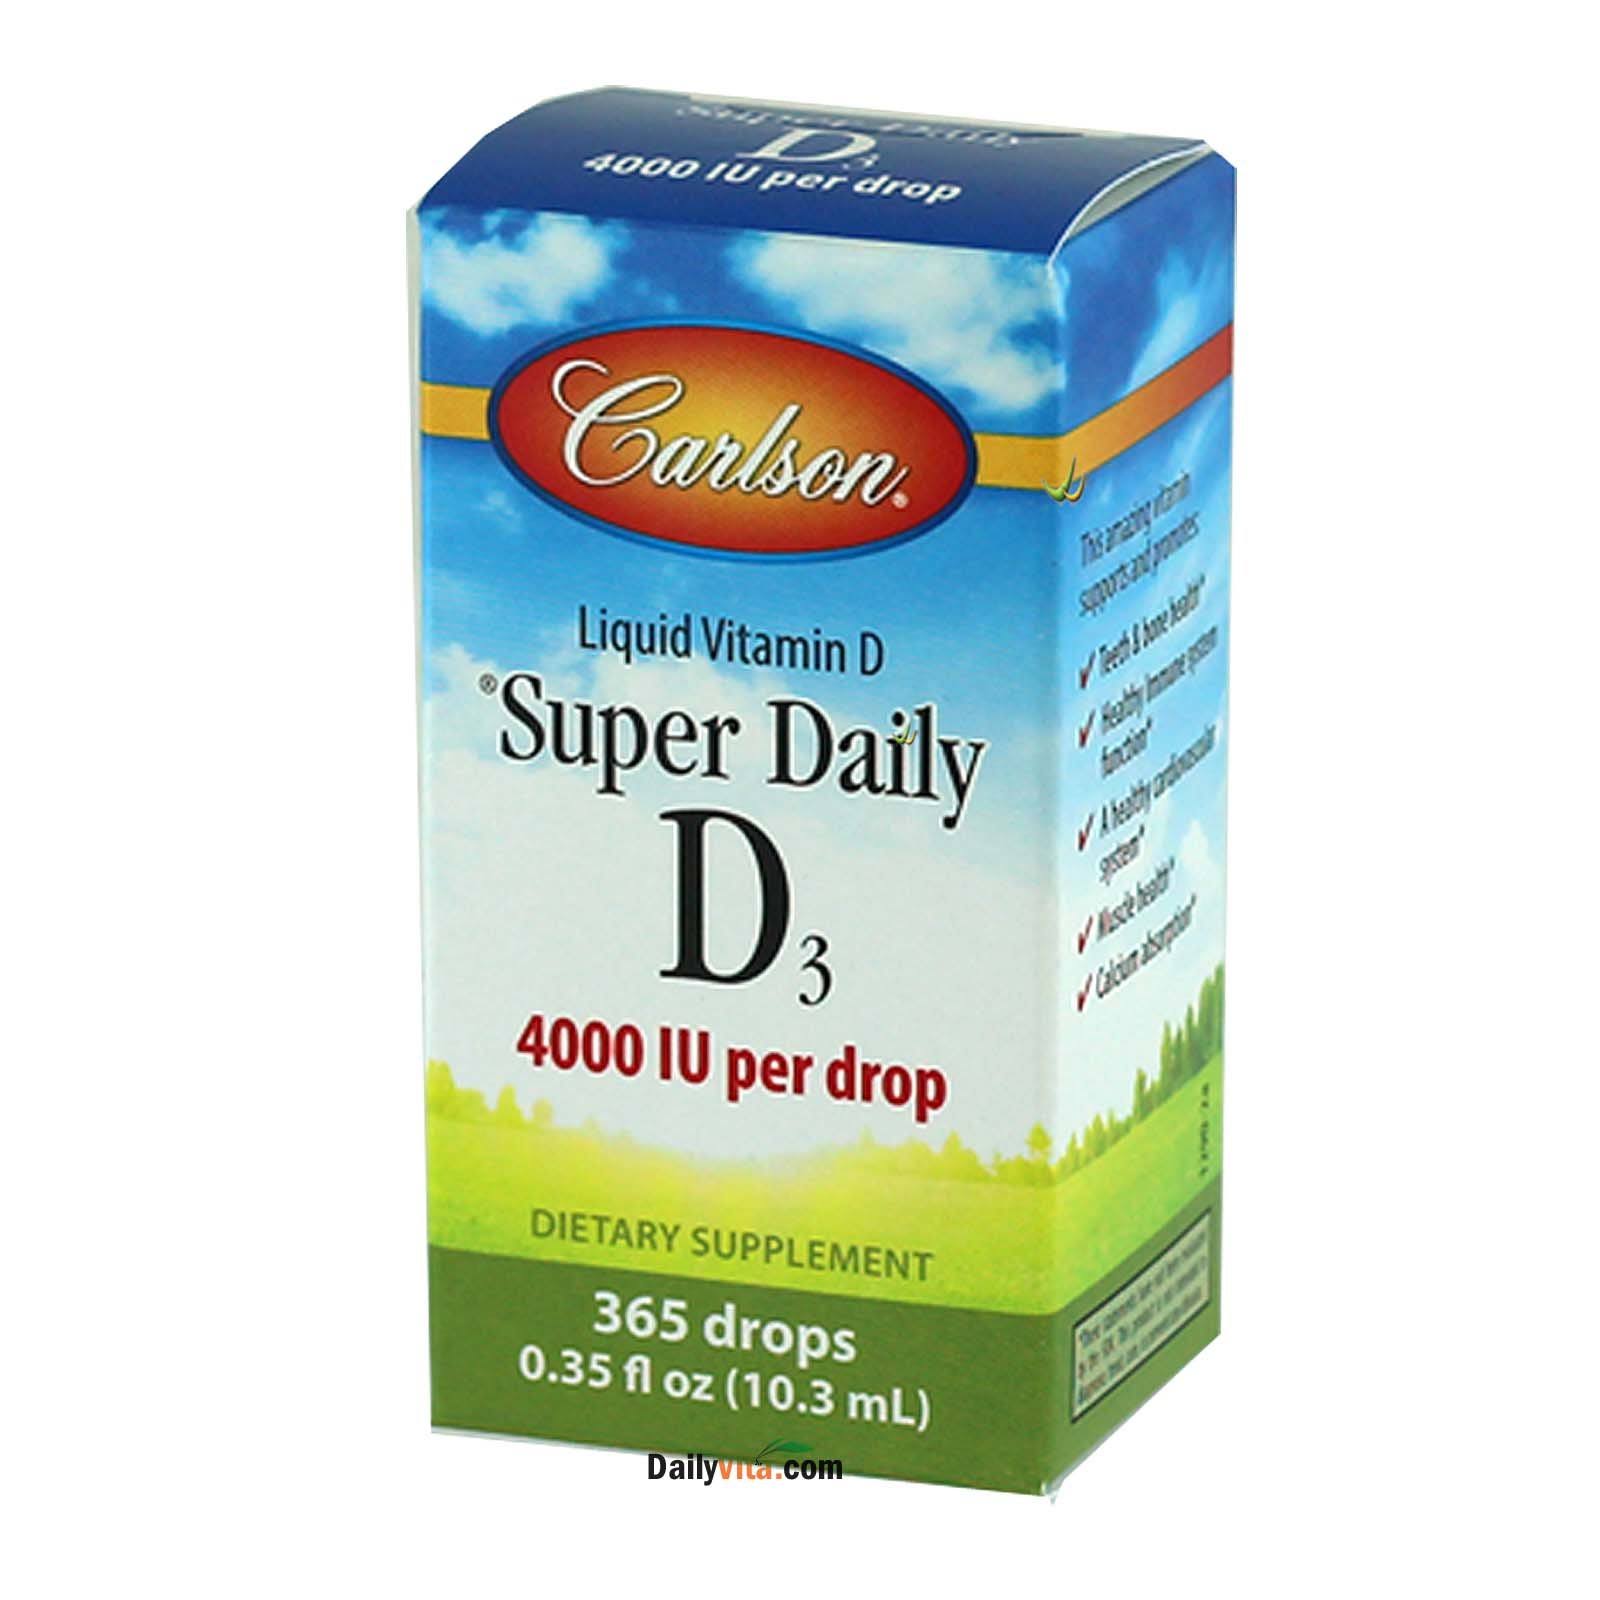 Carlson Super Daily D3 Liquid Vitamin D - 4000iu, 365 drops